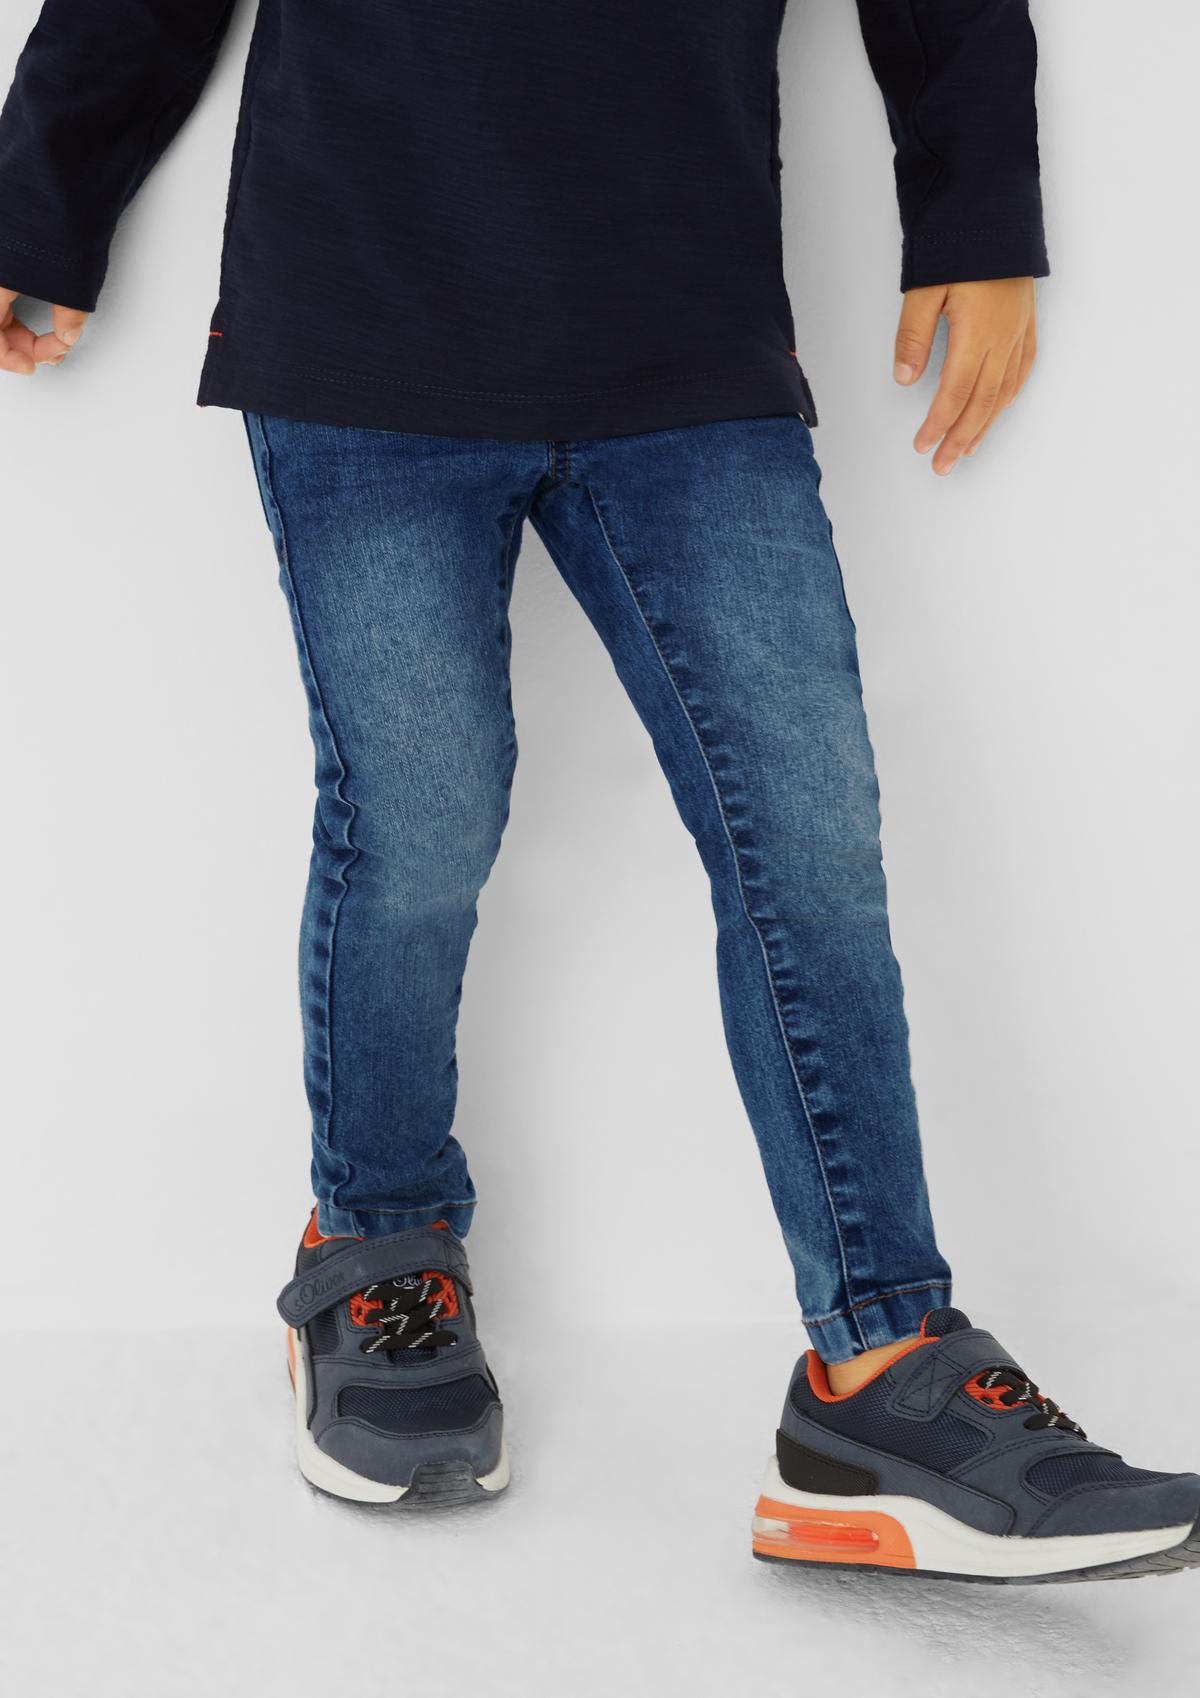 s.Oliver Jeans Skinny Brad / Slim Fit / Mid Rise / Skinny Leg